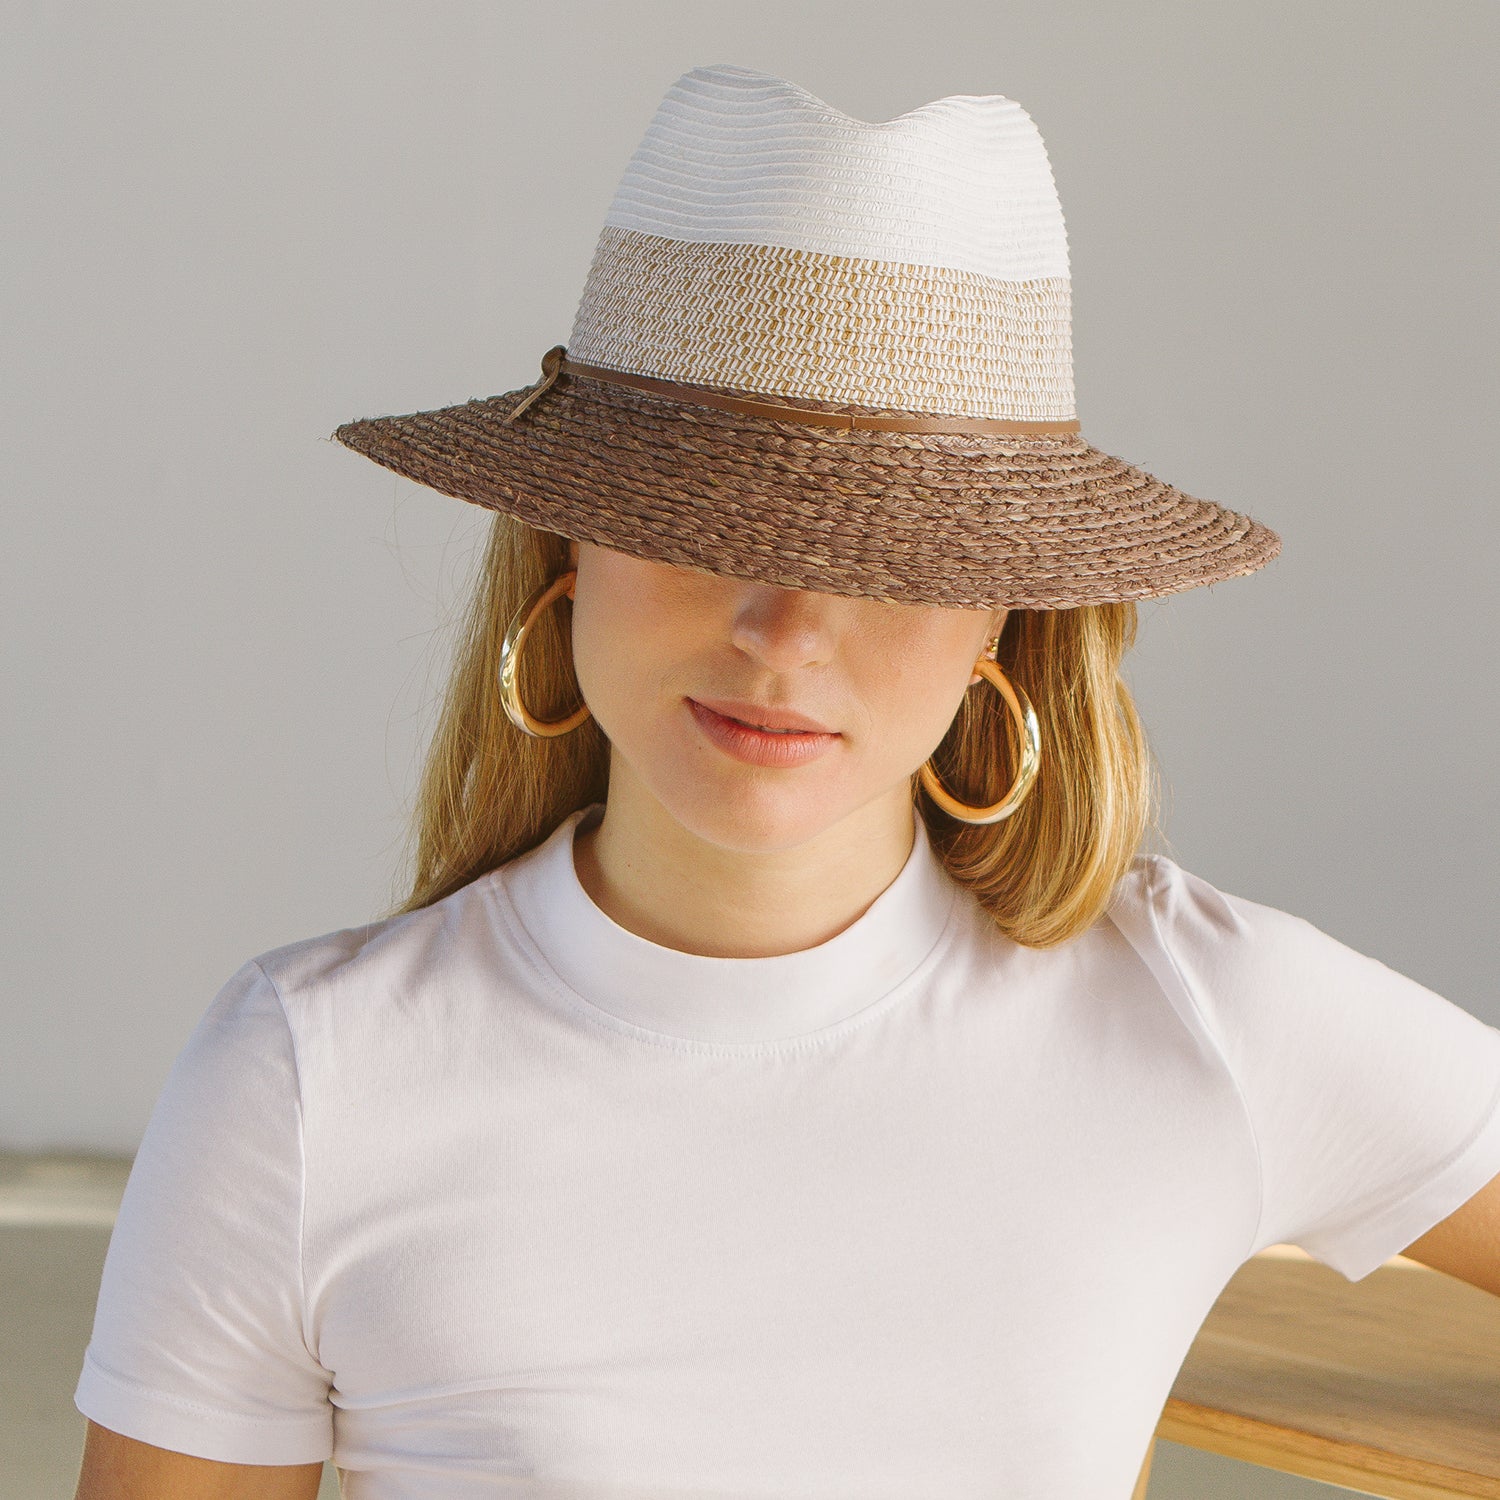 Stylish Wide Brim Round Top Sunhat For Women Lightweight, Hat With